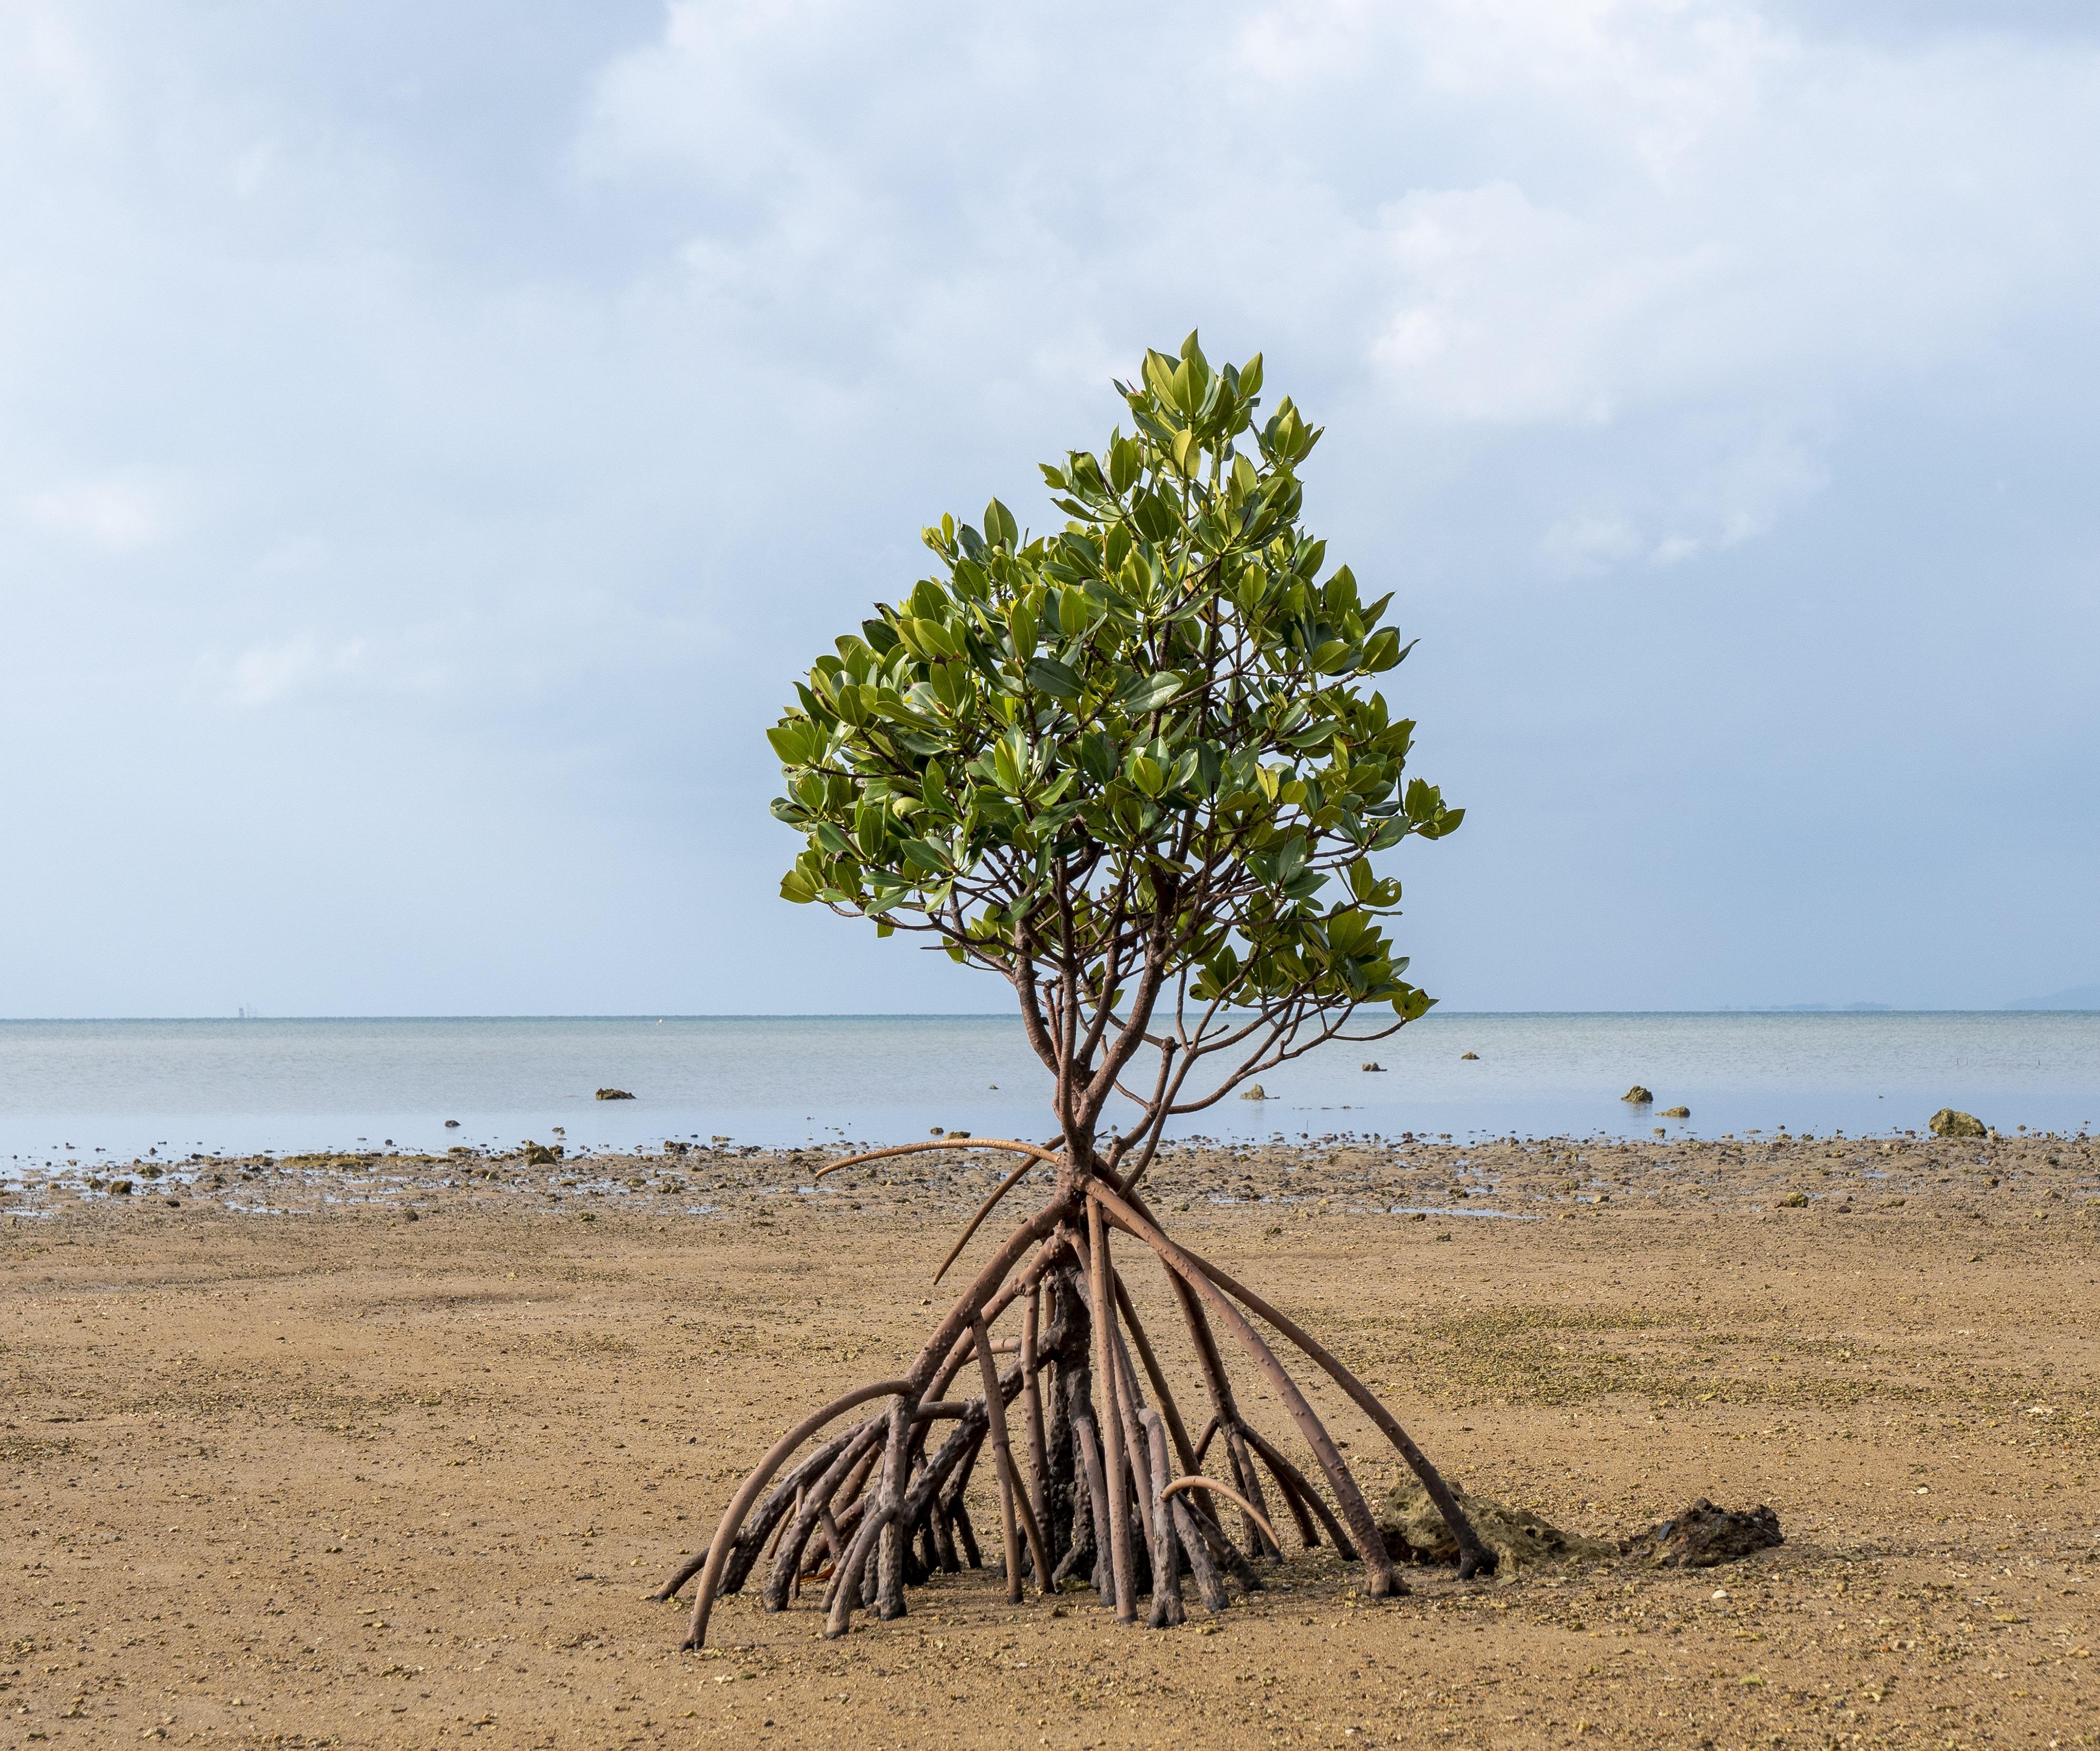 vecteezy_single-mangrove-tree-on-the-beach-in-ishigaki-island-japan_6972798.jpg